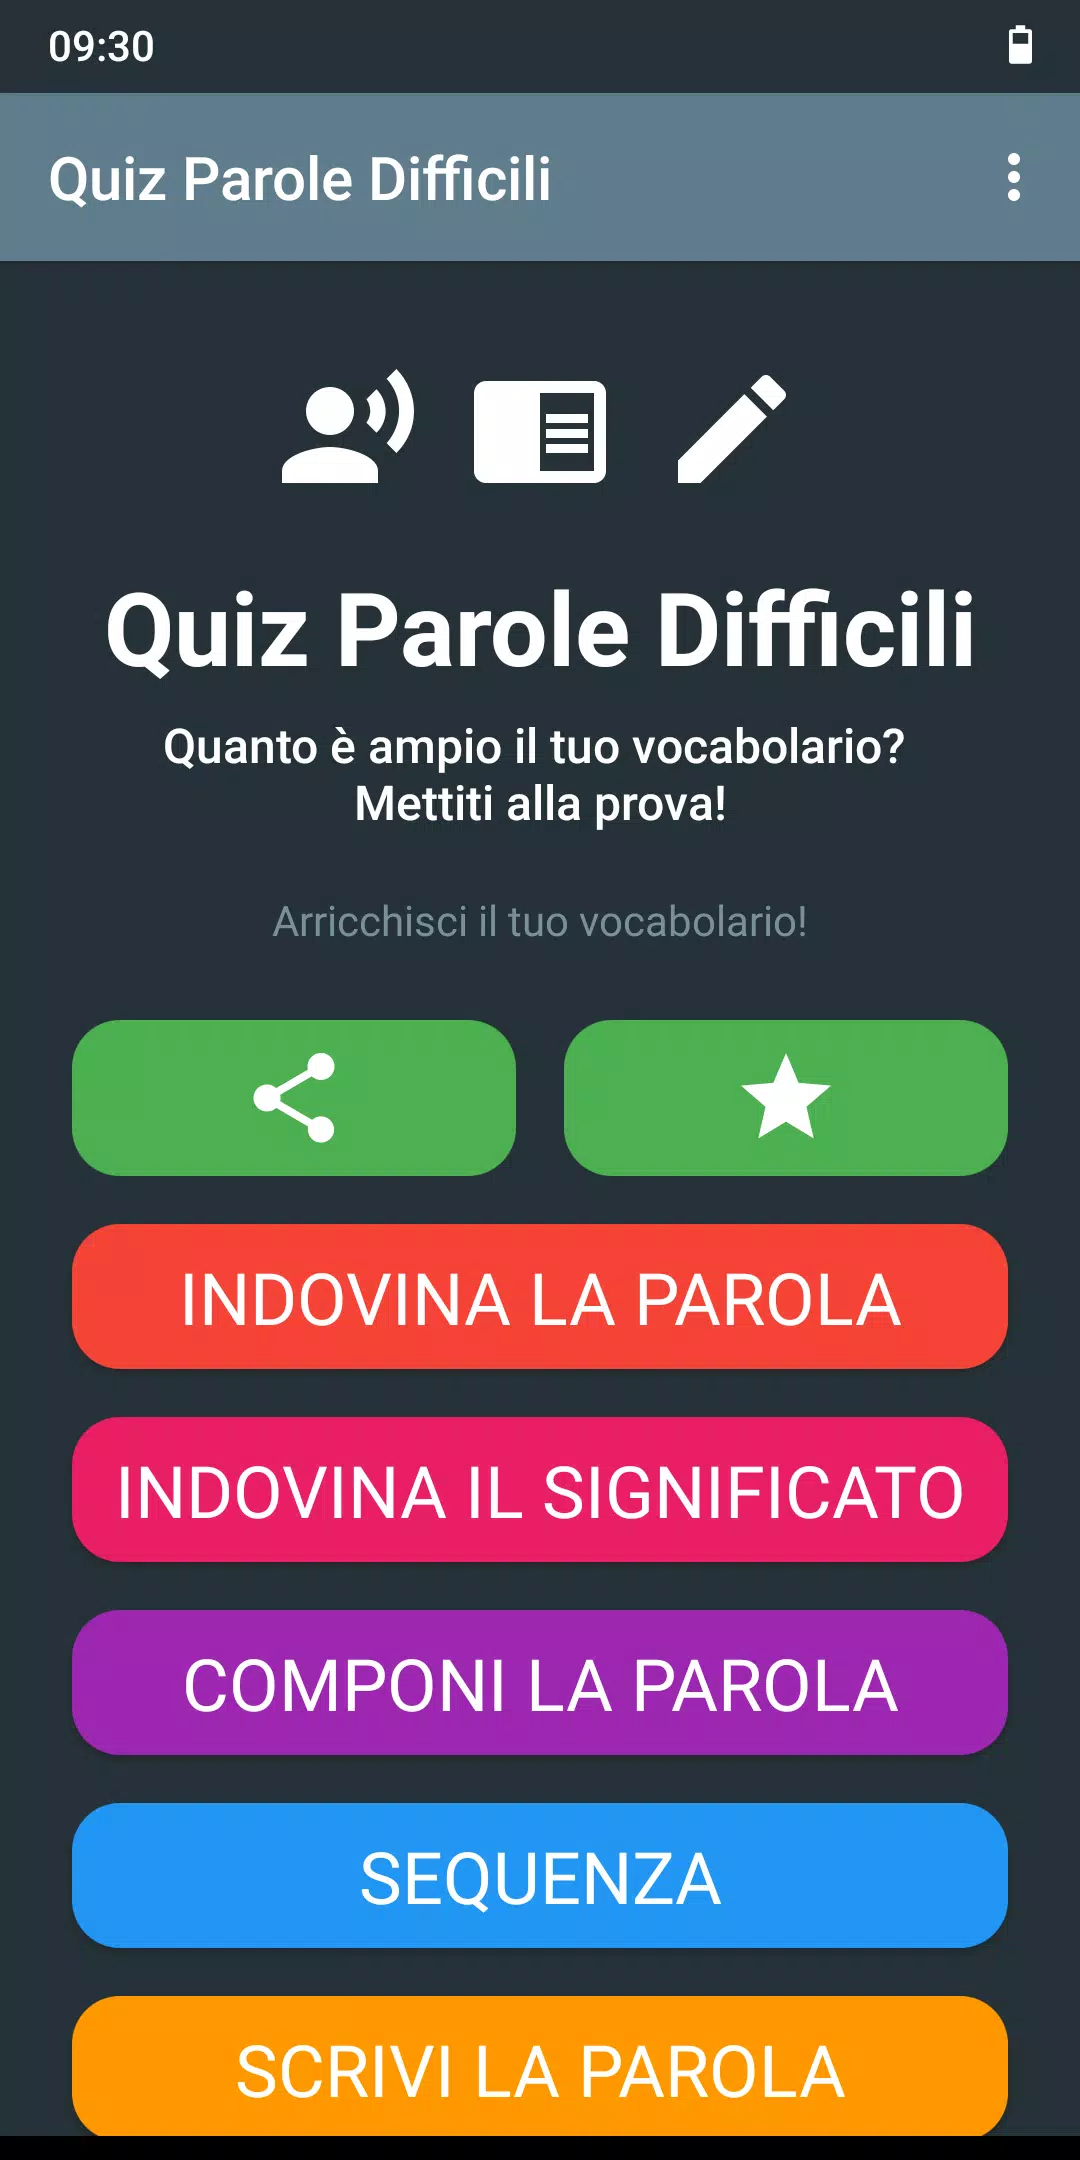 Quiz Parole Difficili for Android - APK Download